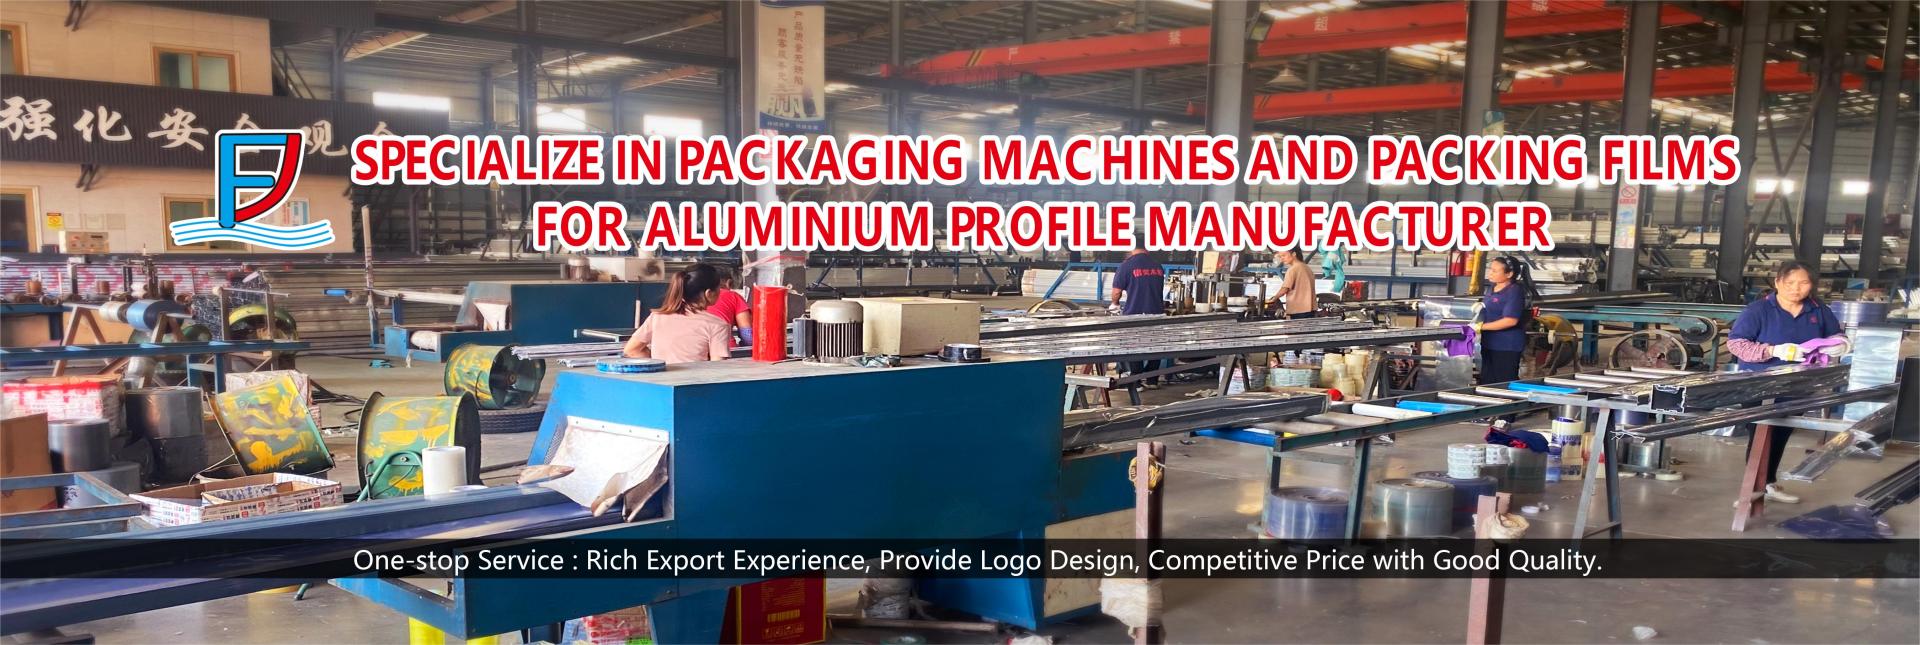 https://www.fodycn.com/aluminium-profile-packaging-plant/